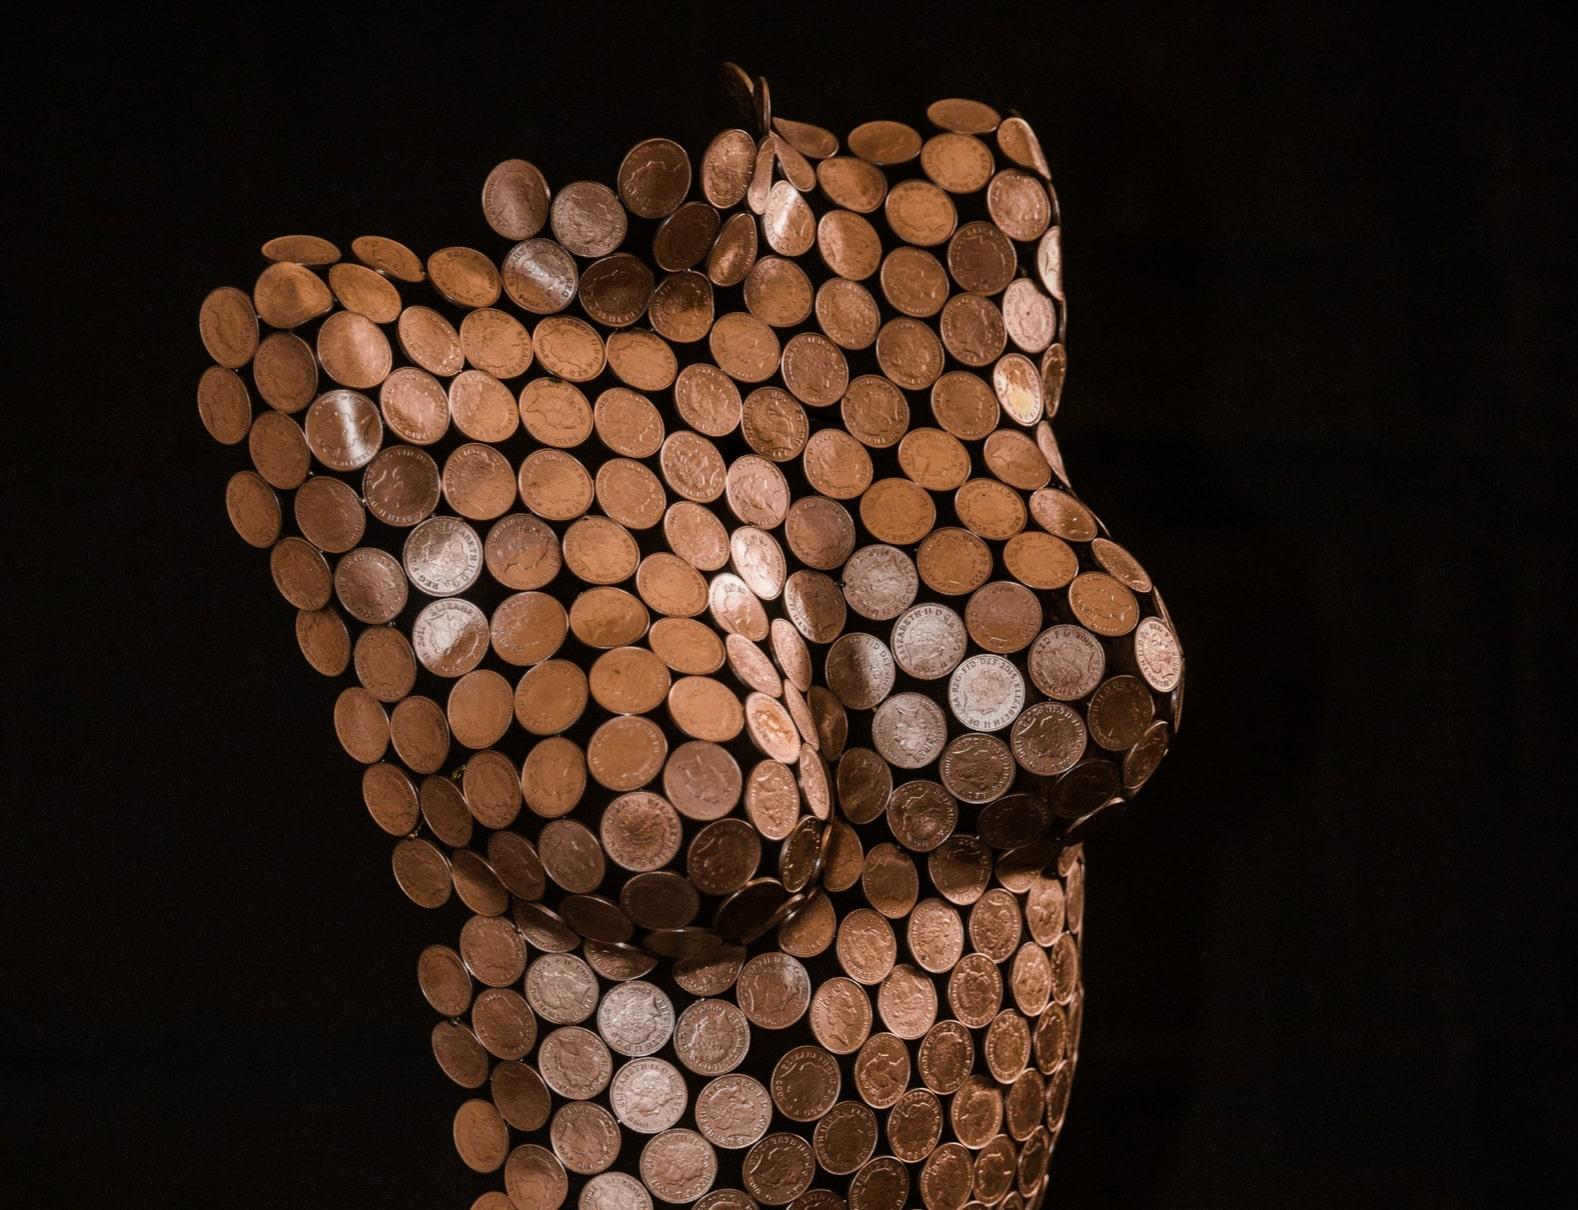 Torso 2p (Front) - original metallic female form sculpture - contemporary art  - Sculpture by Shaun Gagg